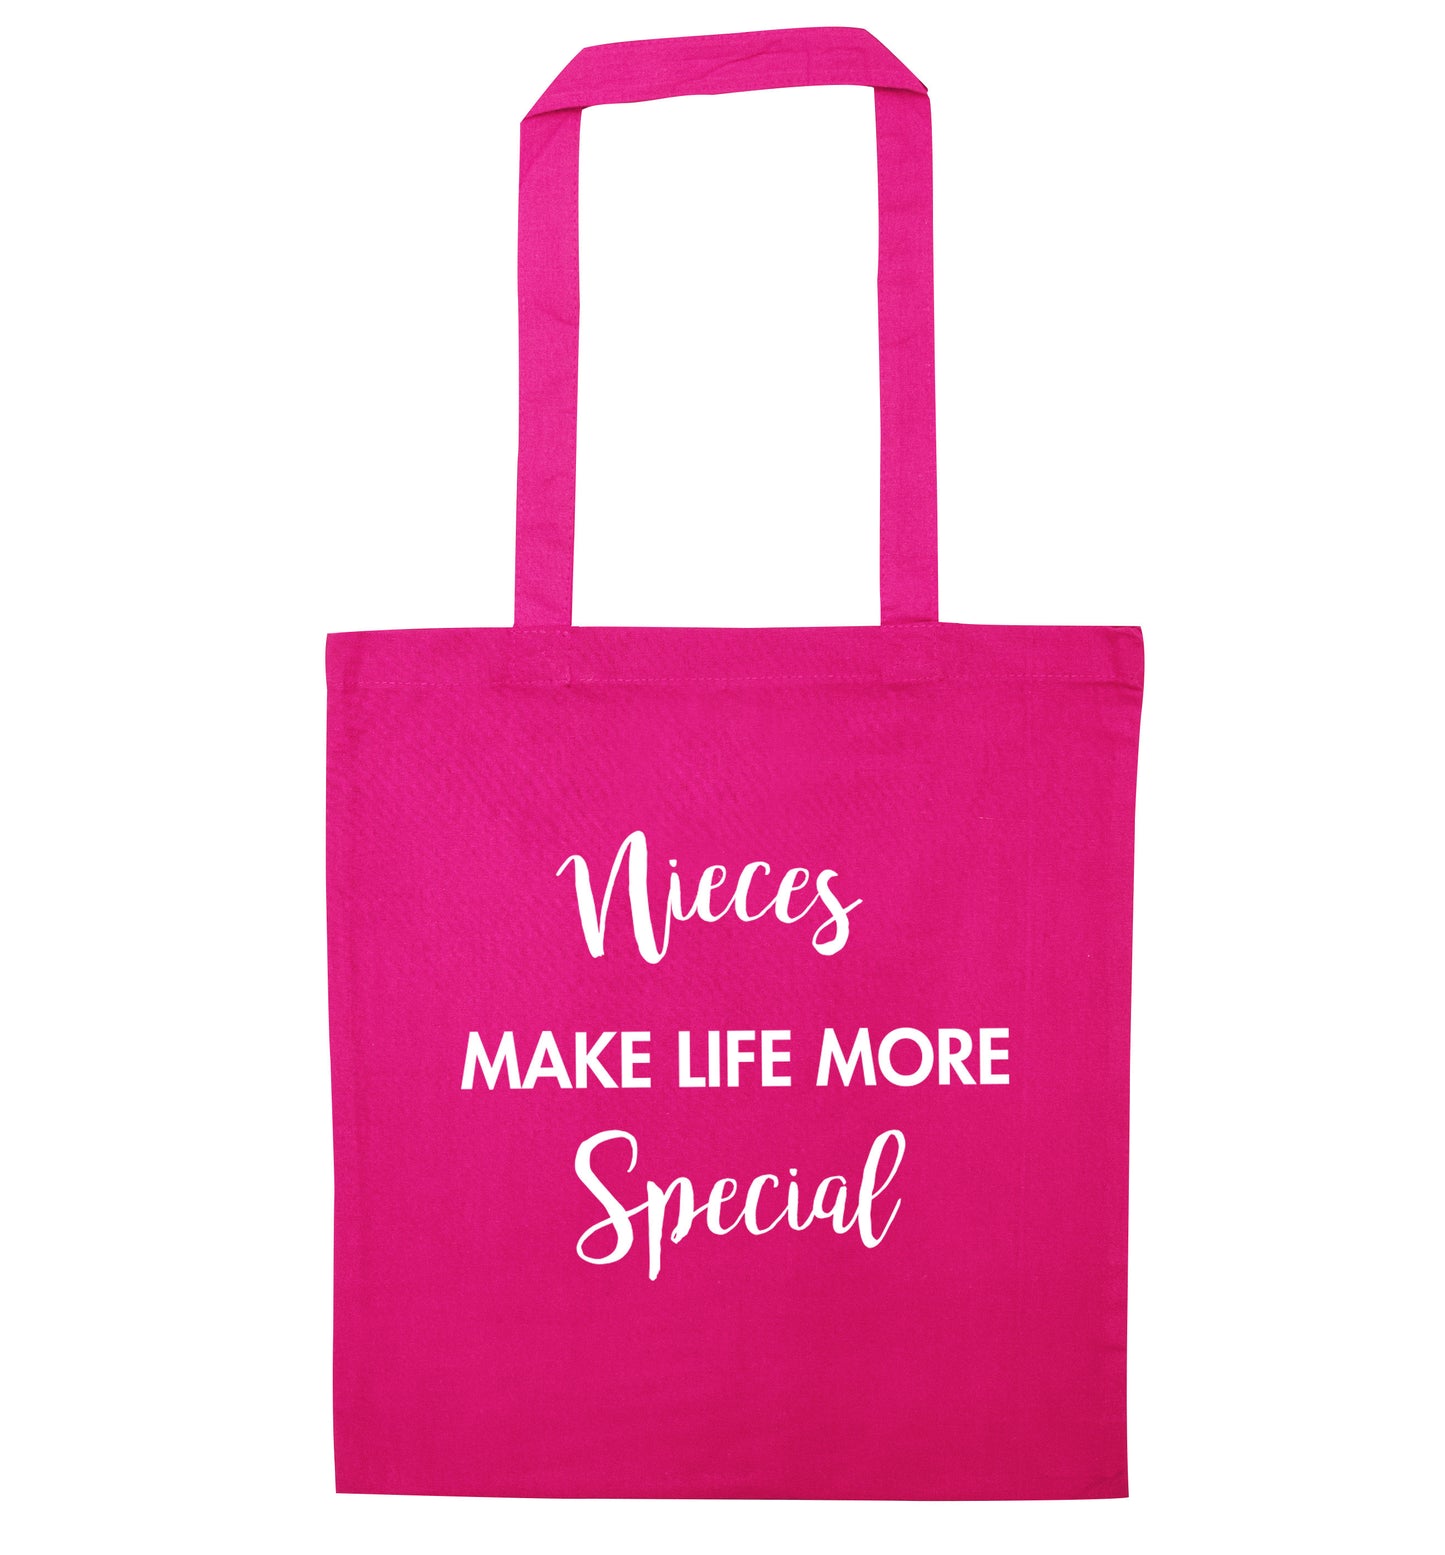 Nieces make life more special pink tote bag